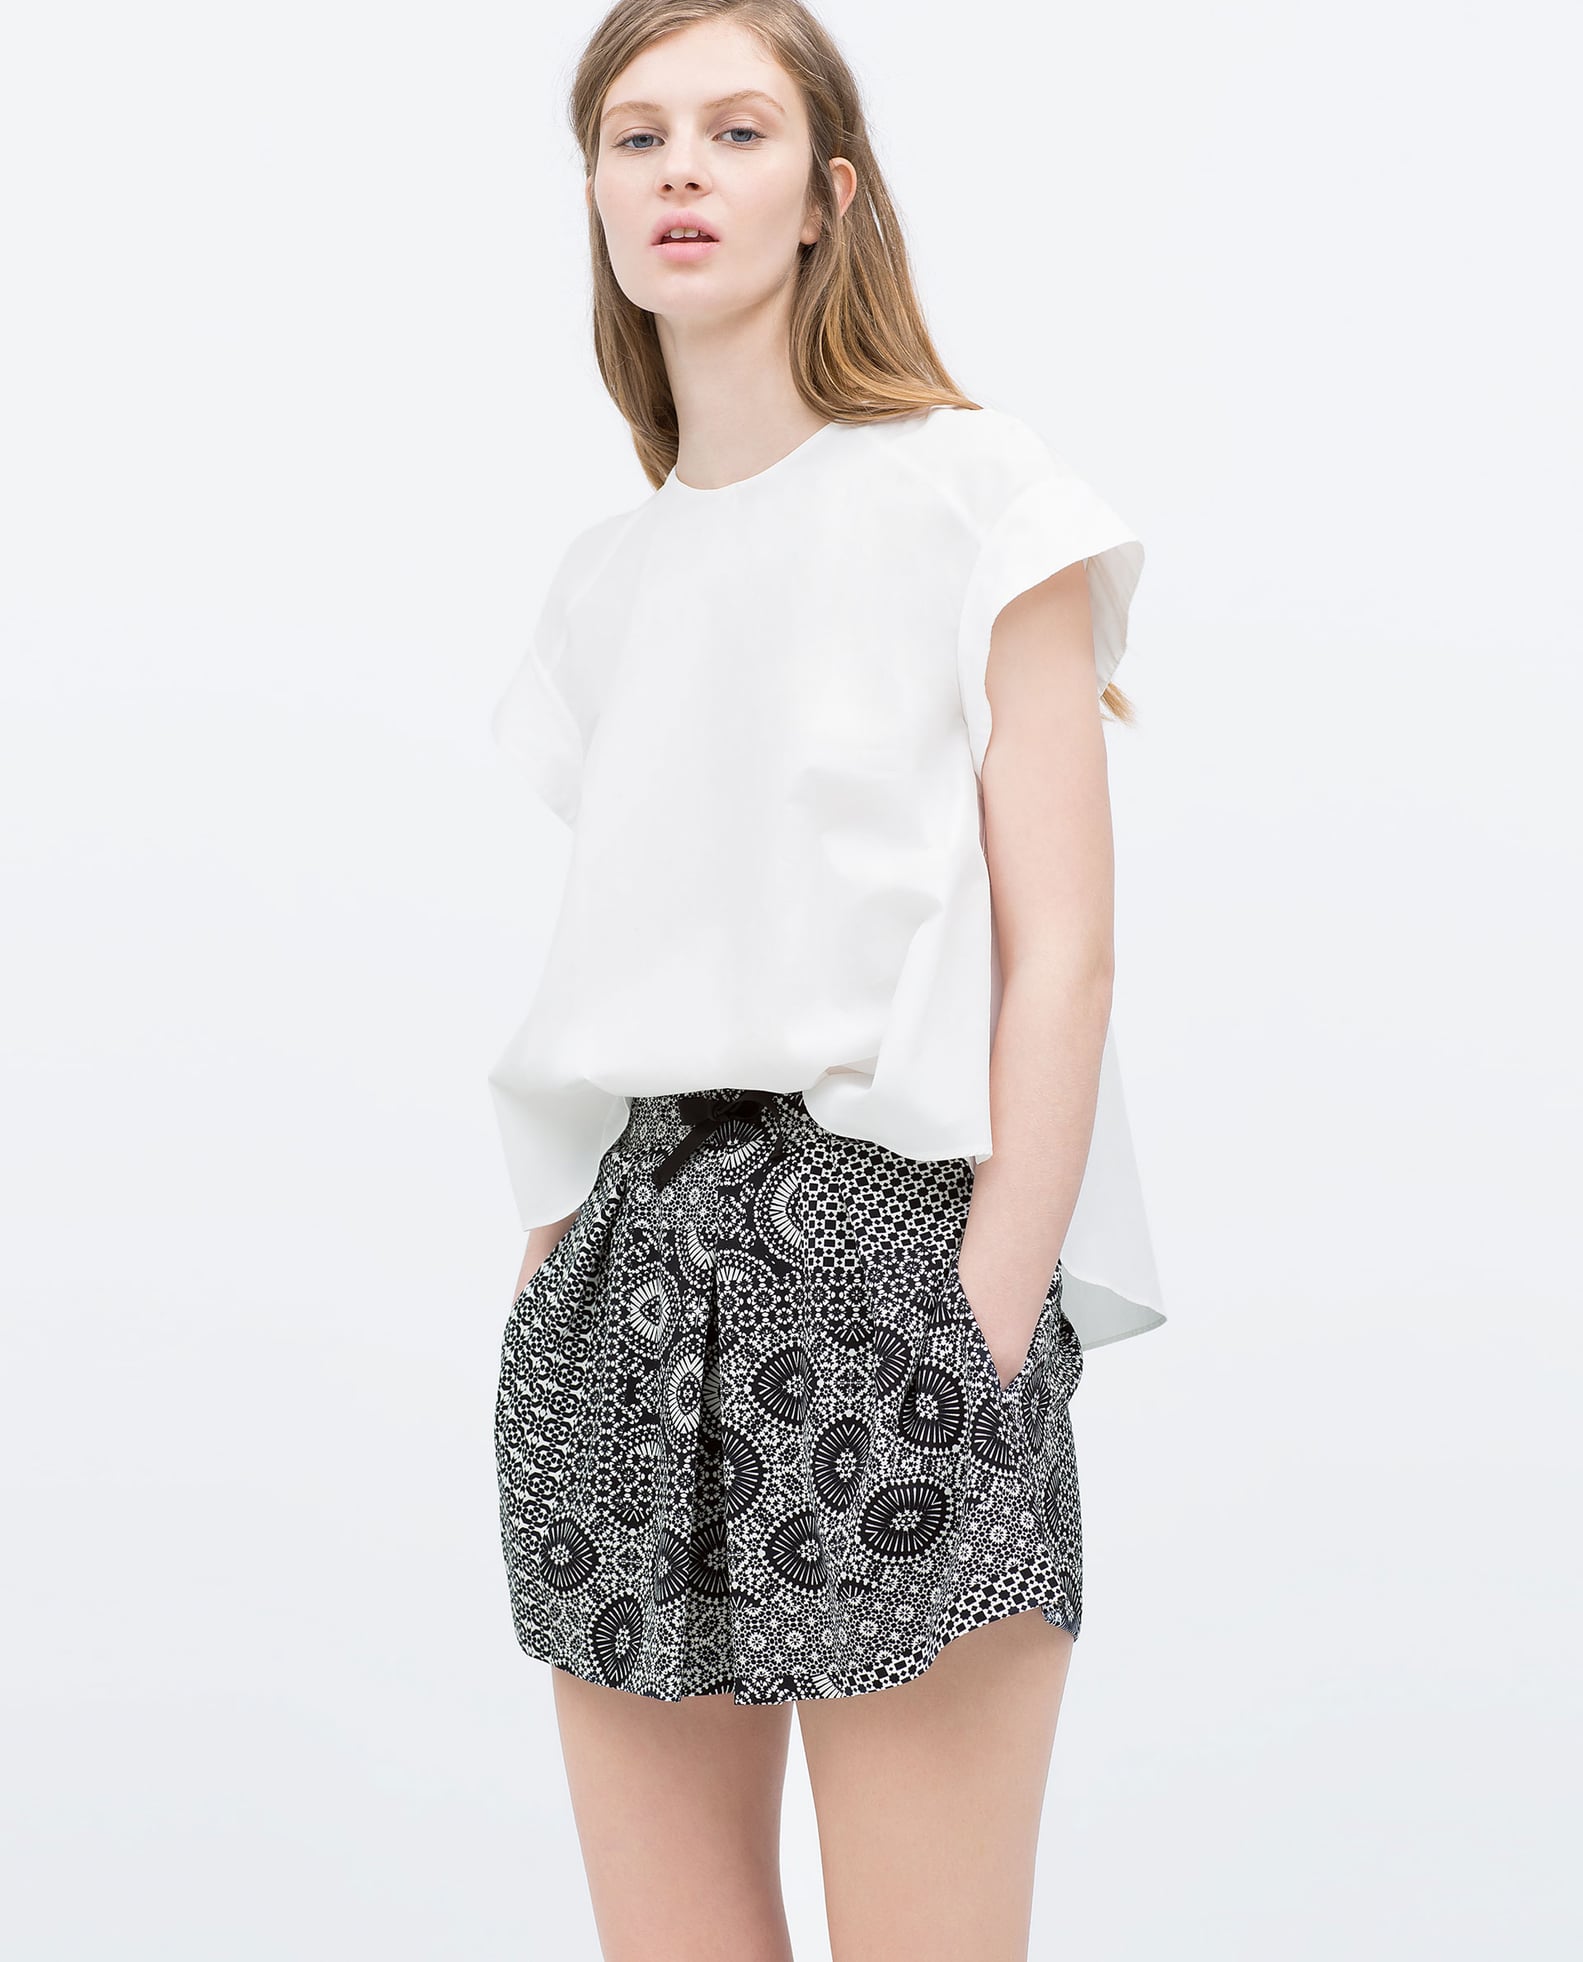 Zara Sale Shopping June 2015 | POPSUGAR Fashion